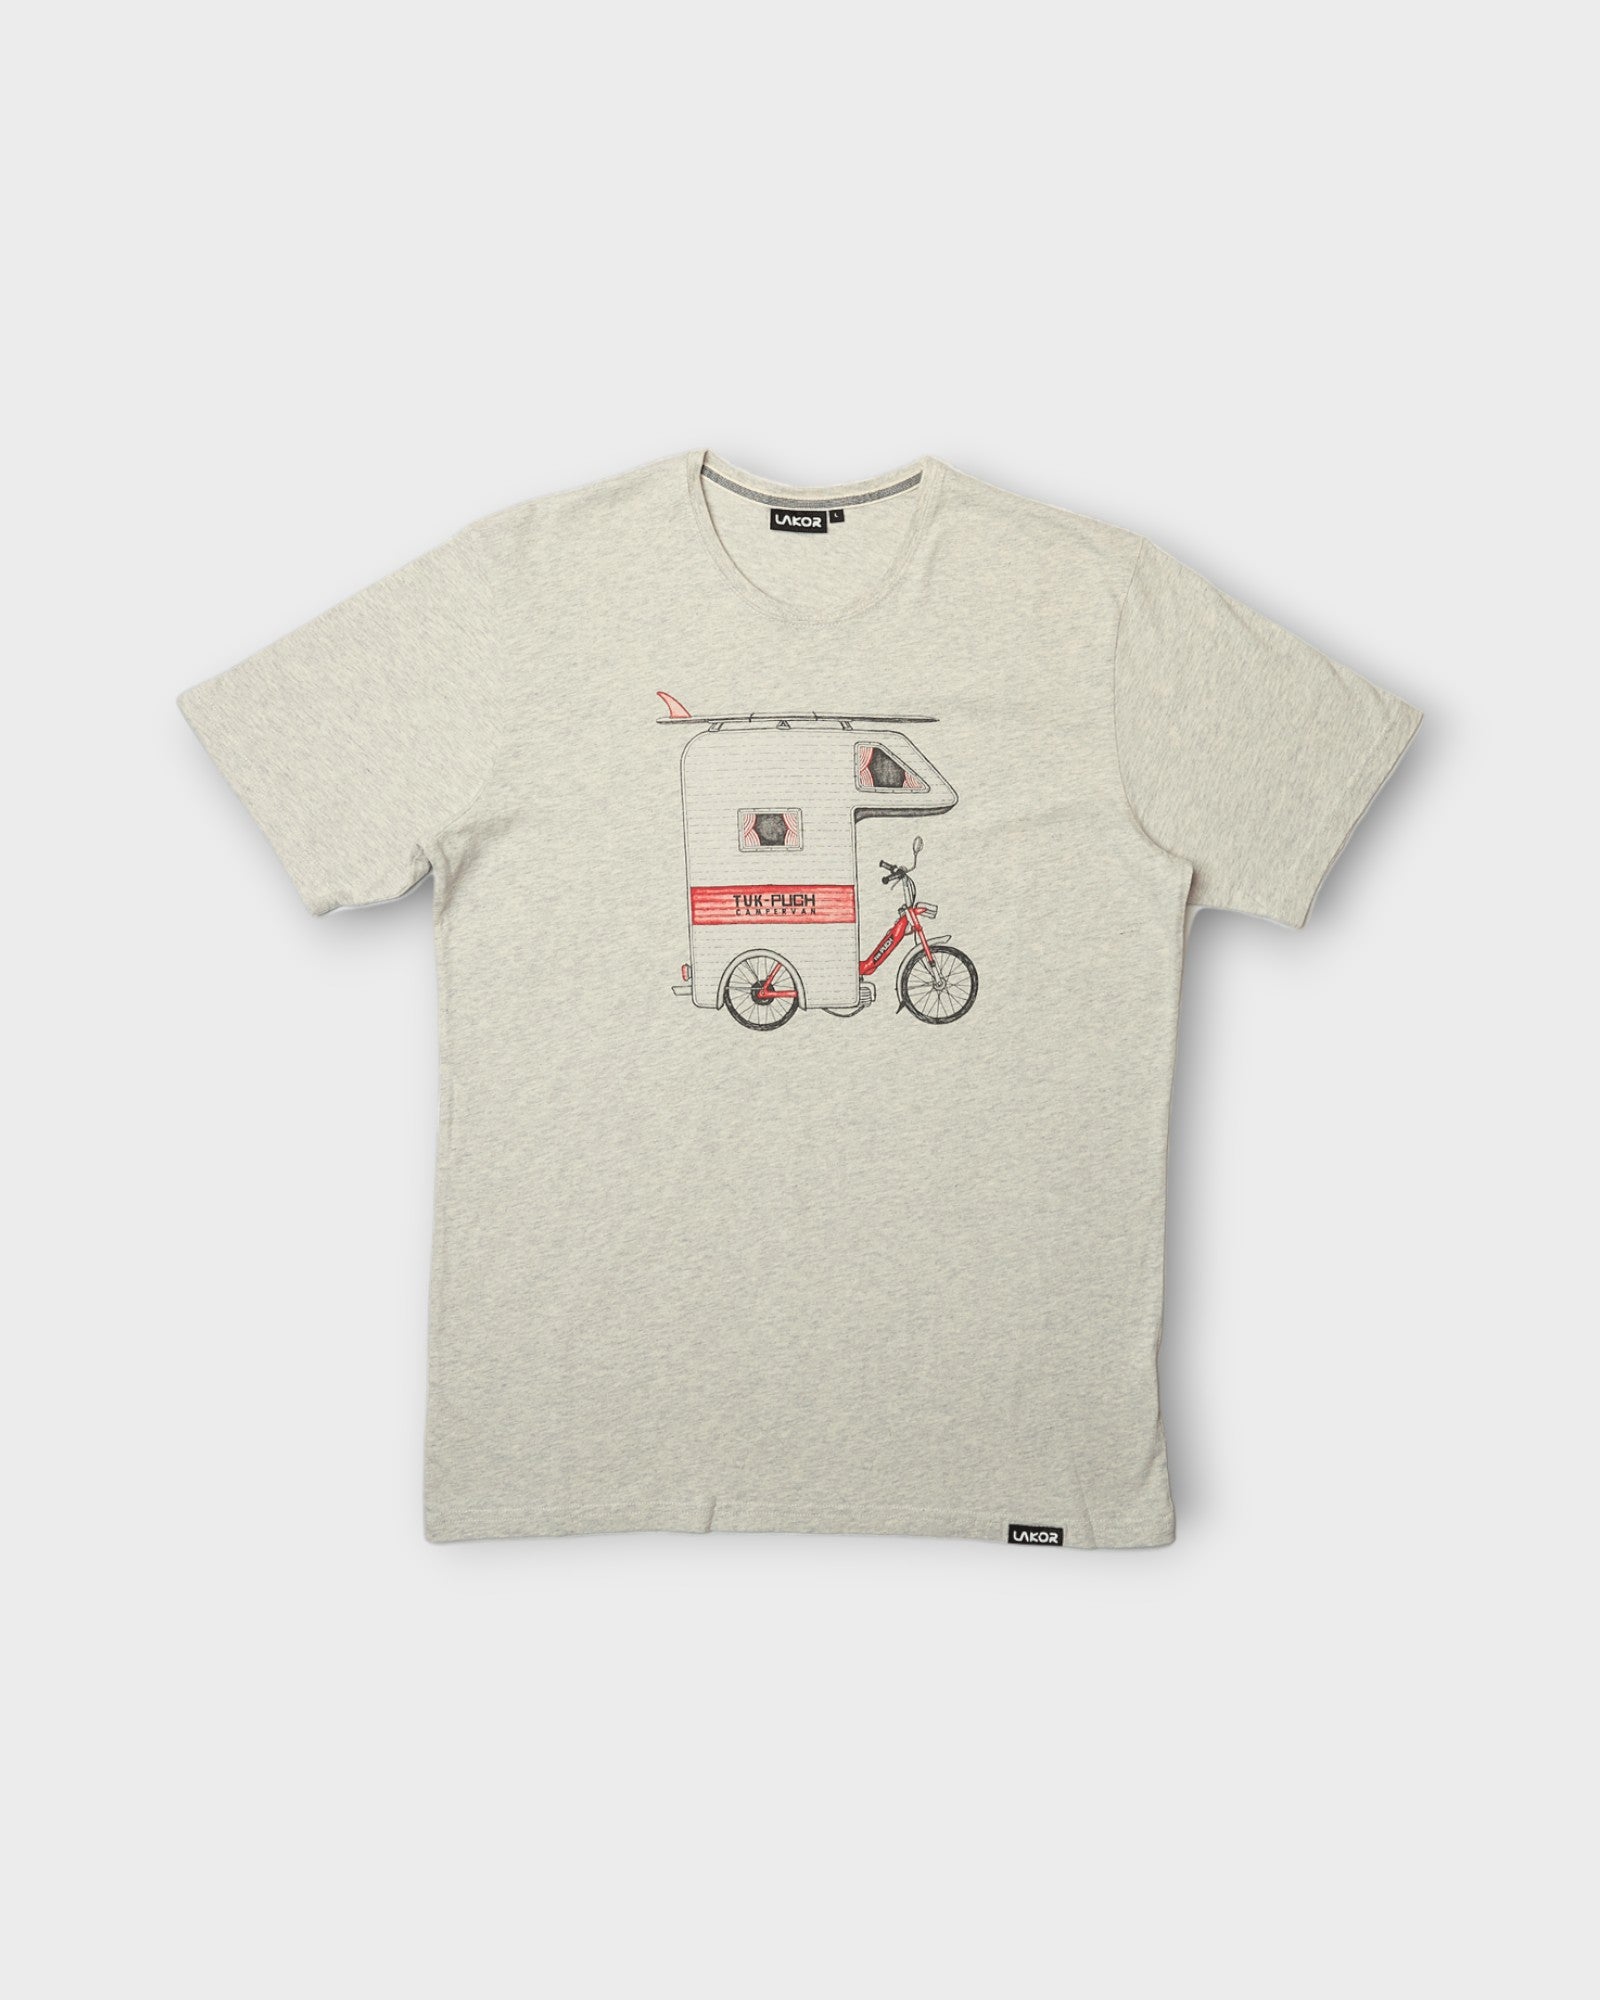 Tuk Puch T-shirt - Oatmeal Melange